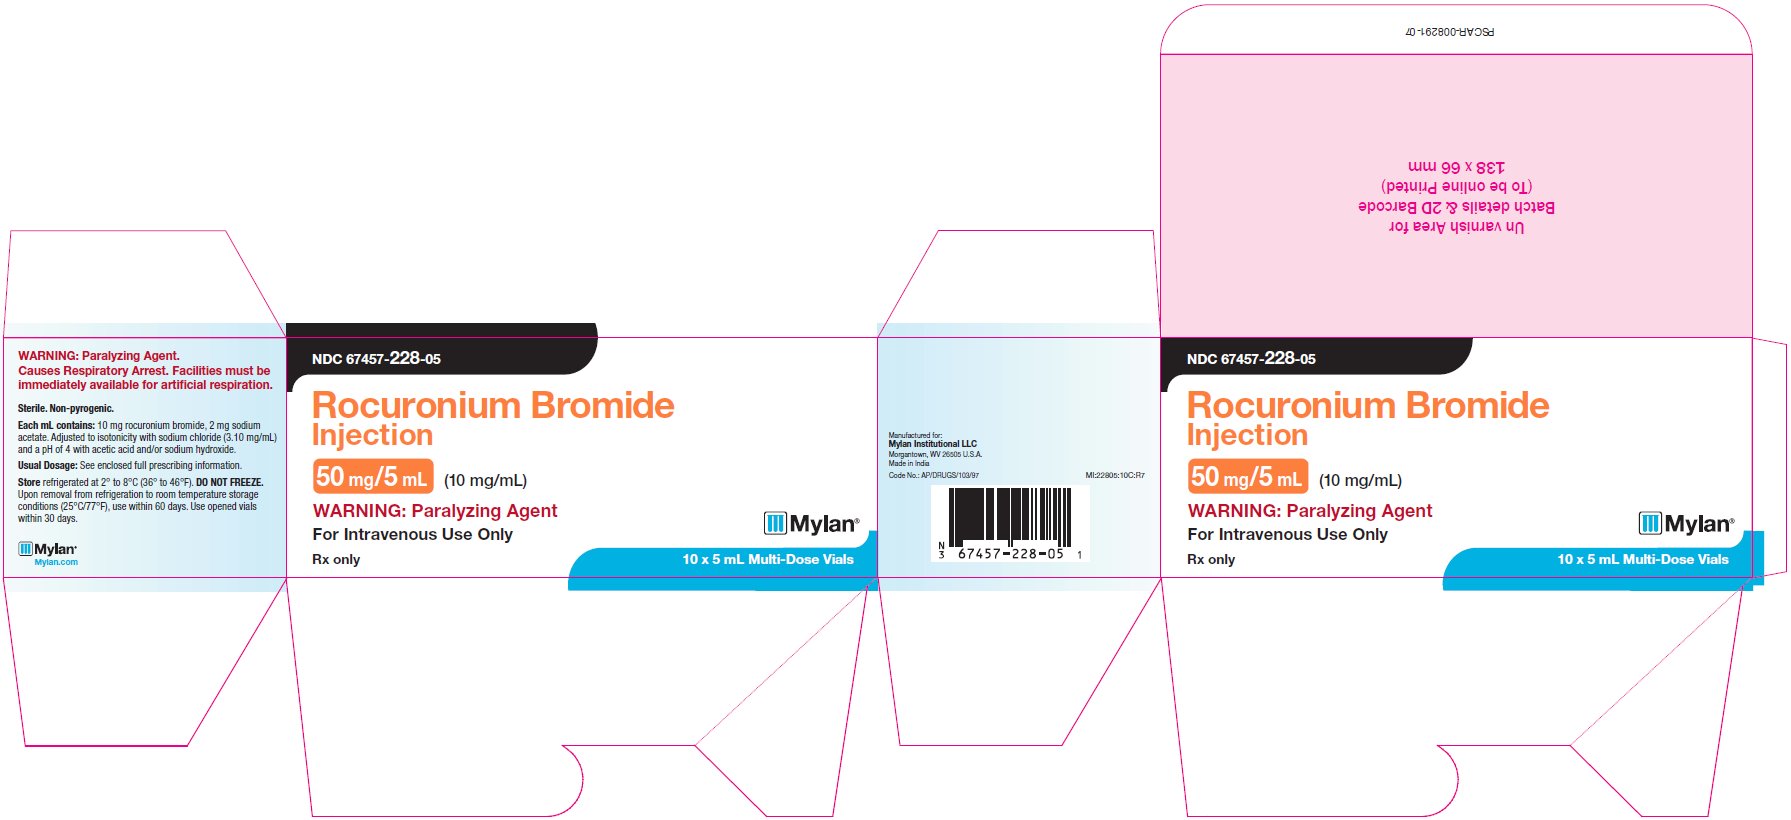 Rocuronium Bromide Injection 50 mg/5 mL (10 mg/mL) Carton Label